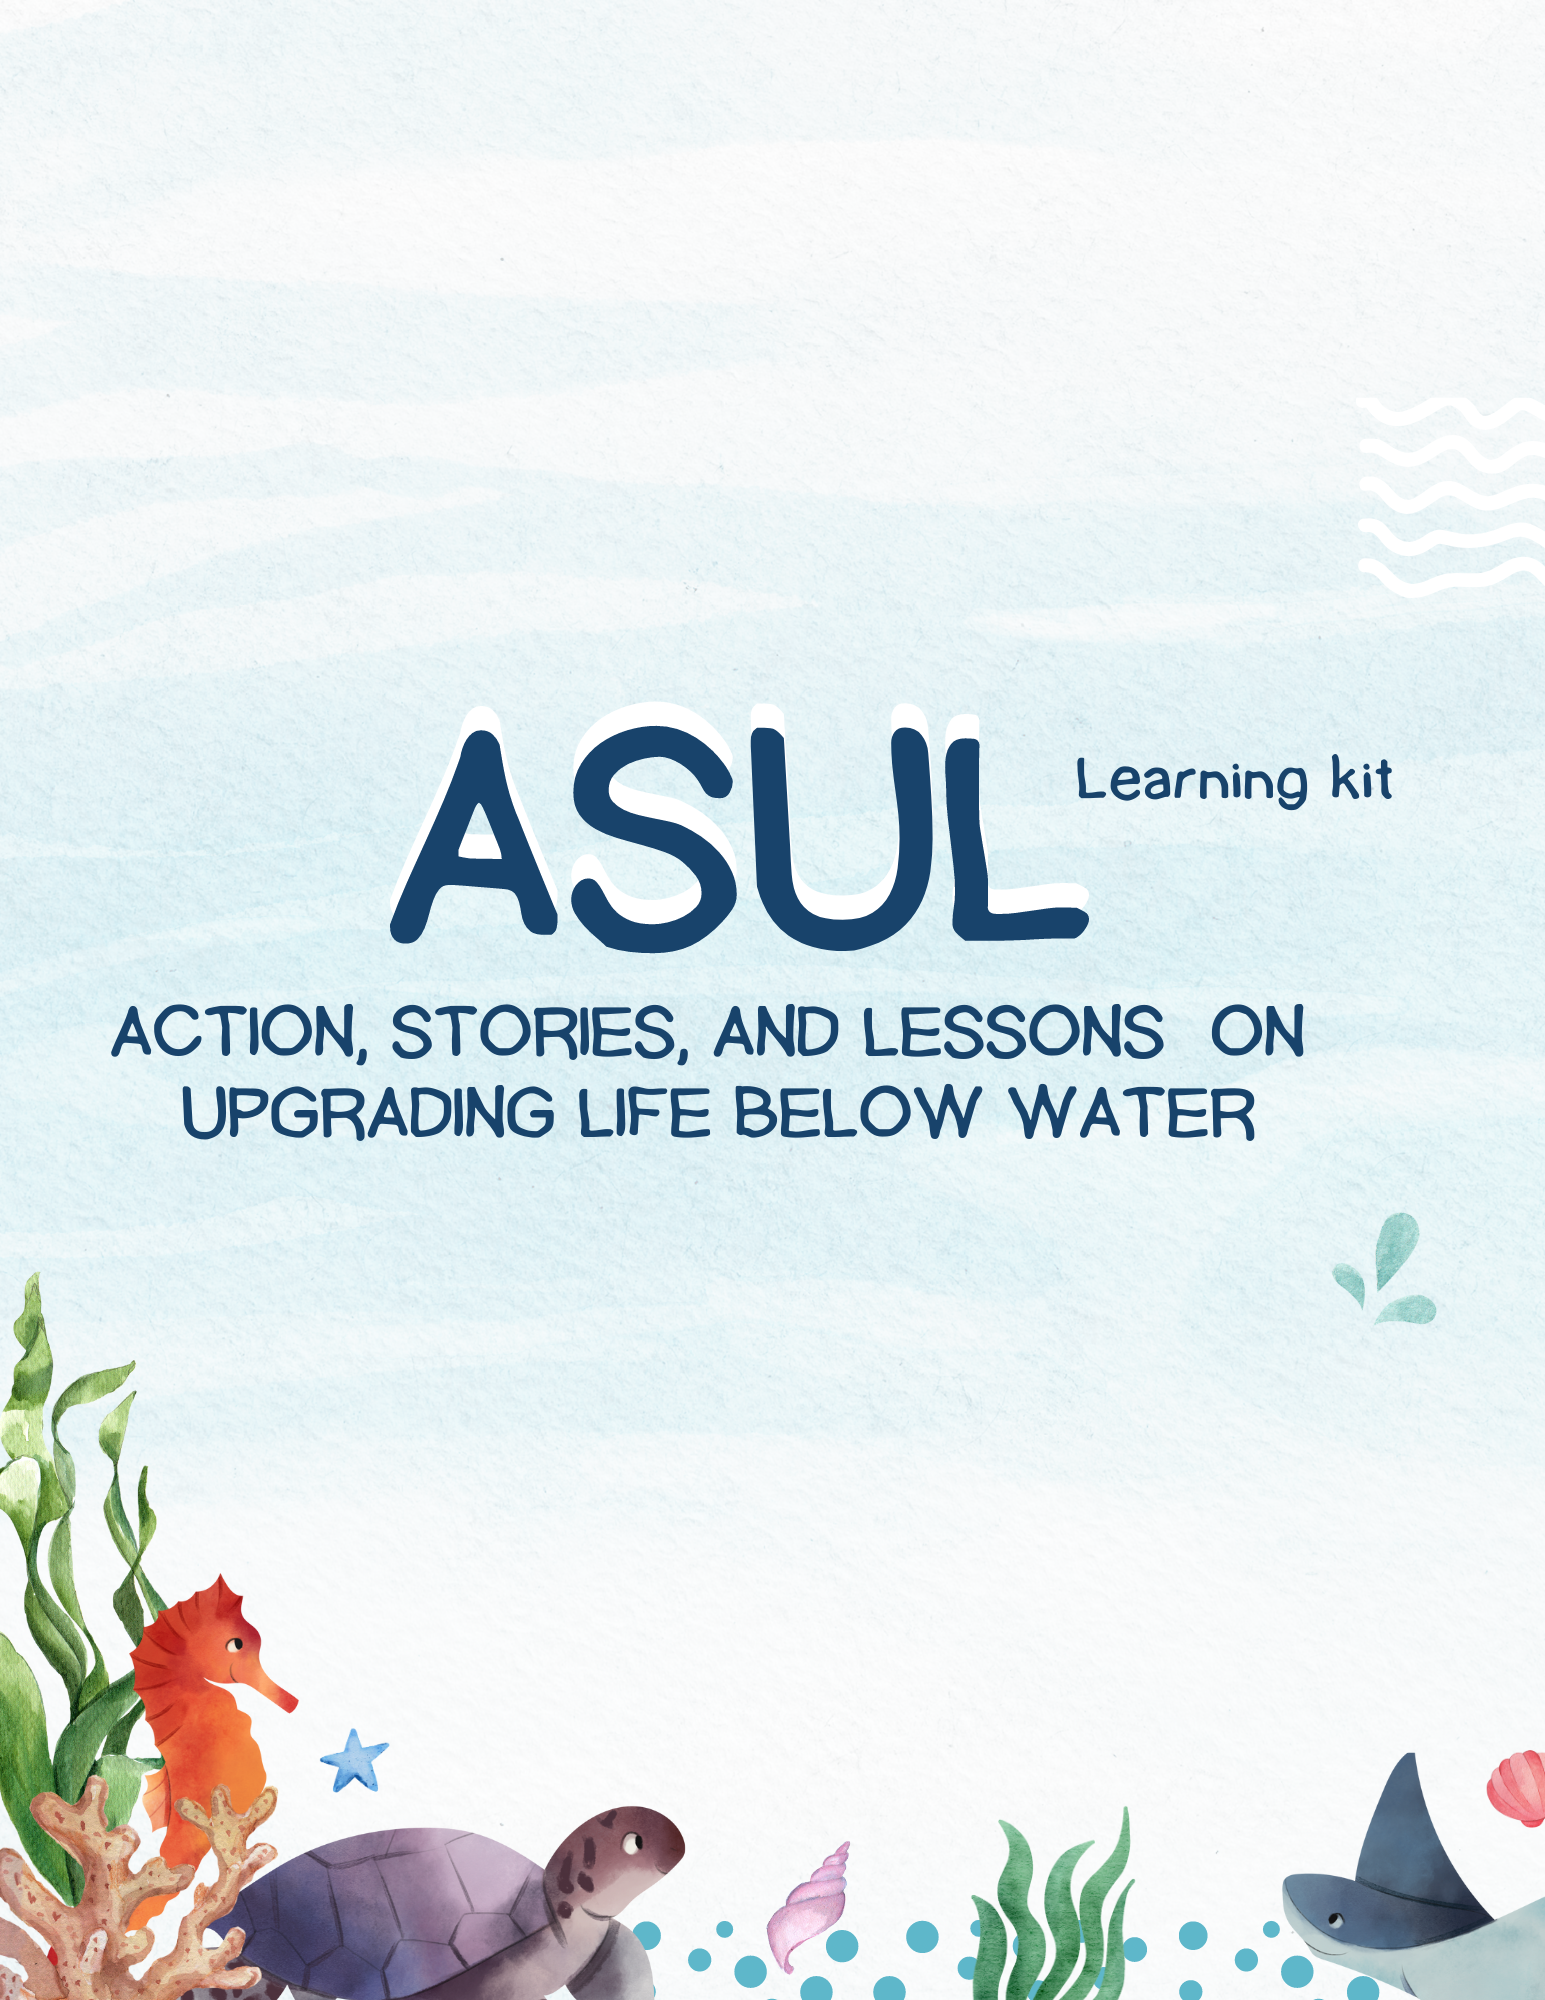 ASUL Learning Kit